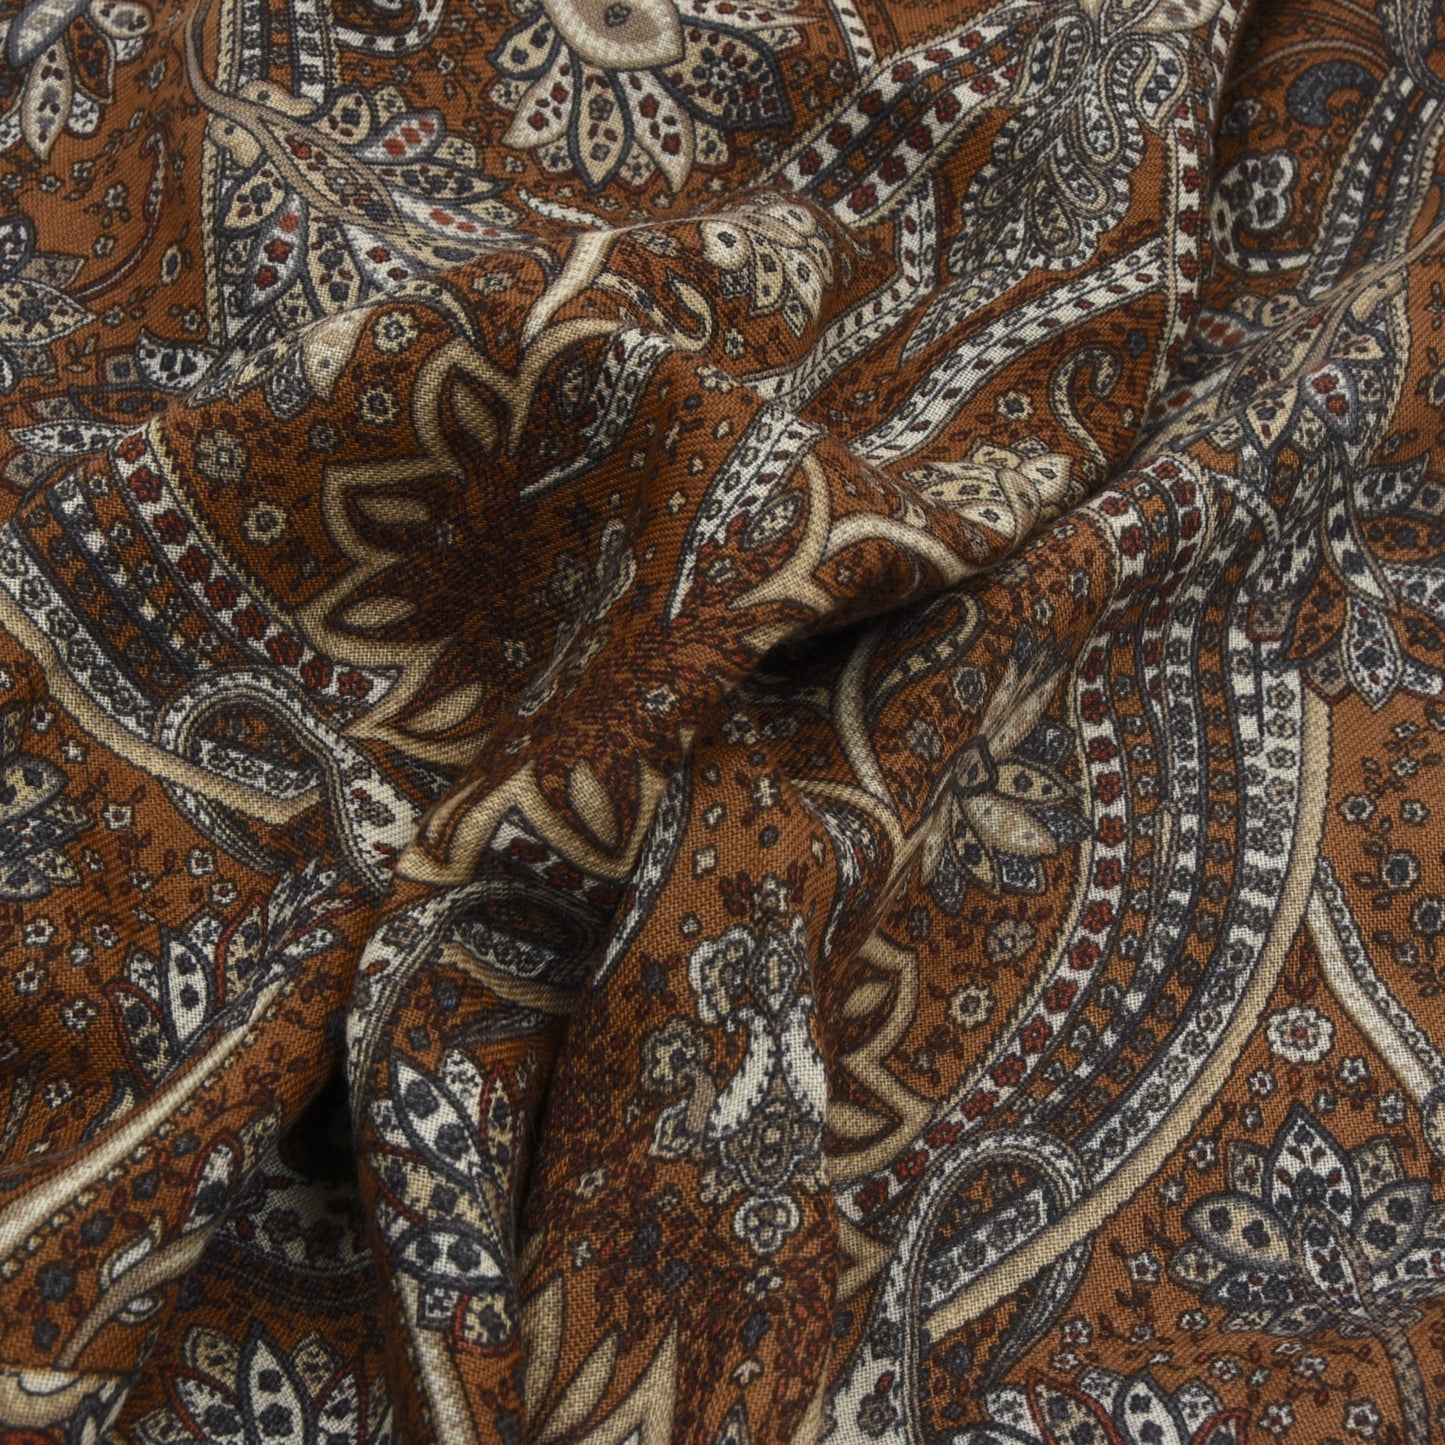 Codello Double-Sided Wool-Silk Dress Scarf 157cm - Paisley